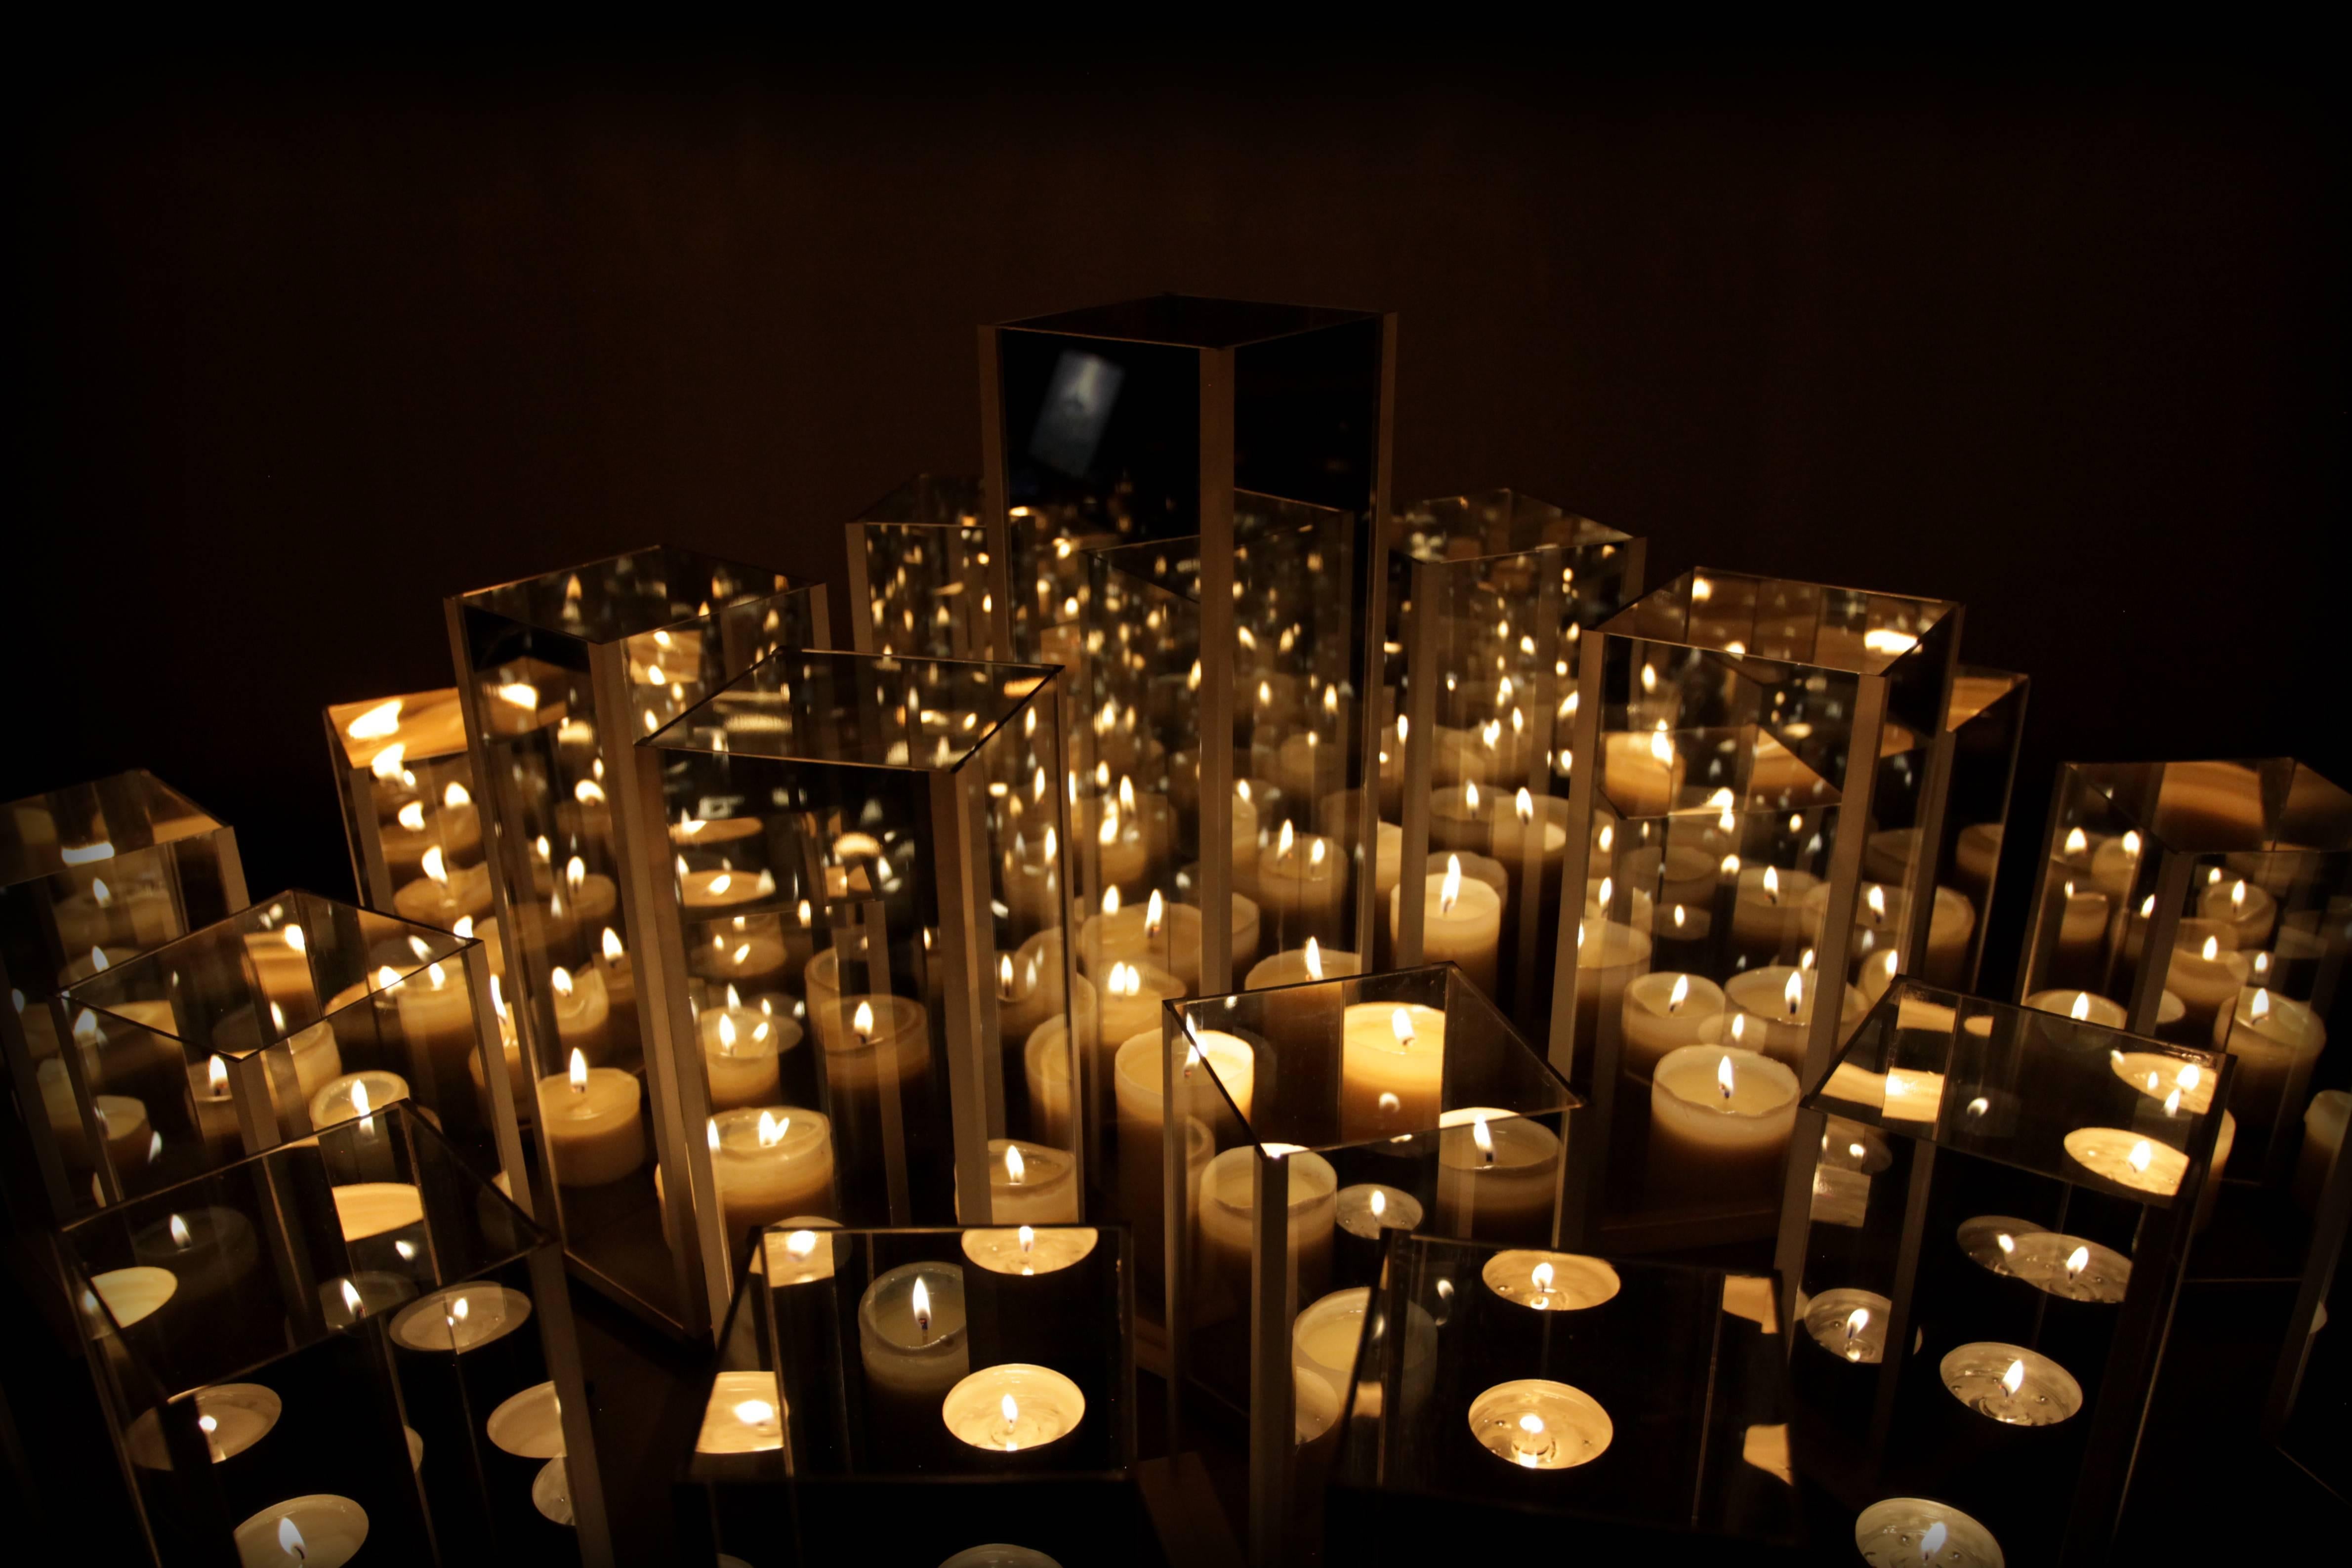 Mirror Set of Kaleido12, Candleholders by Arturo Erbsman For Sale